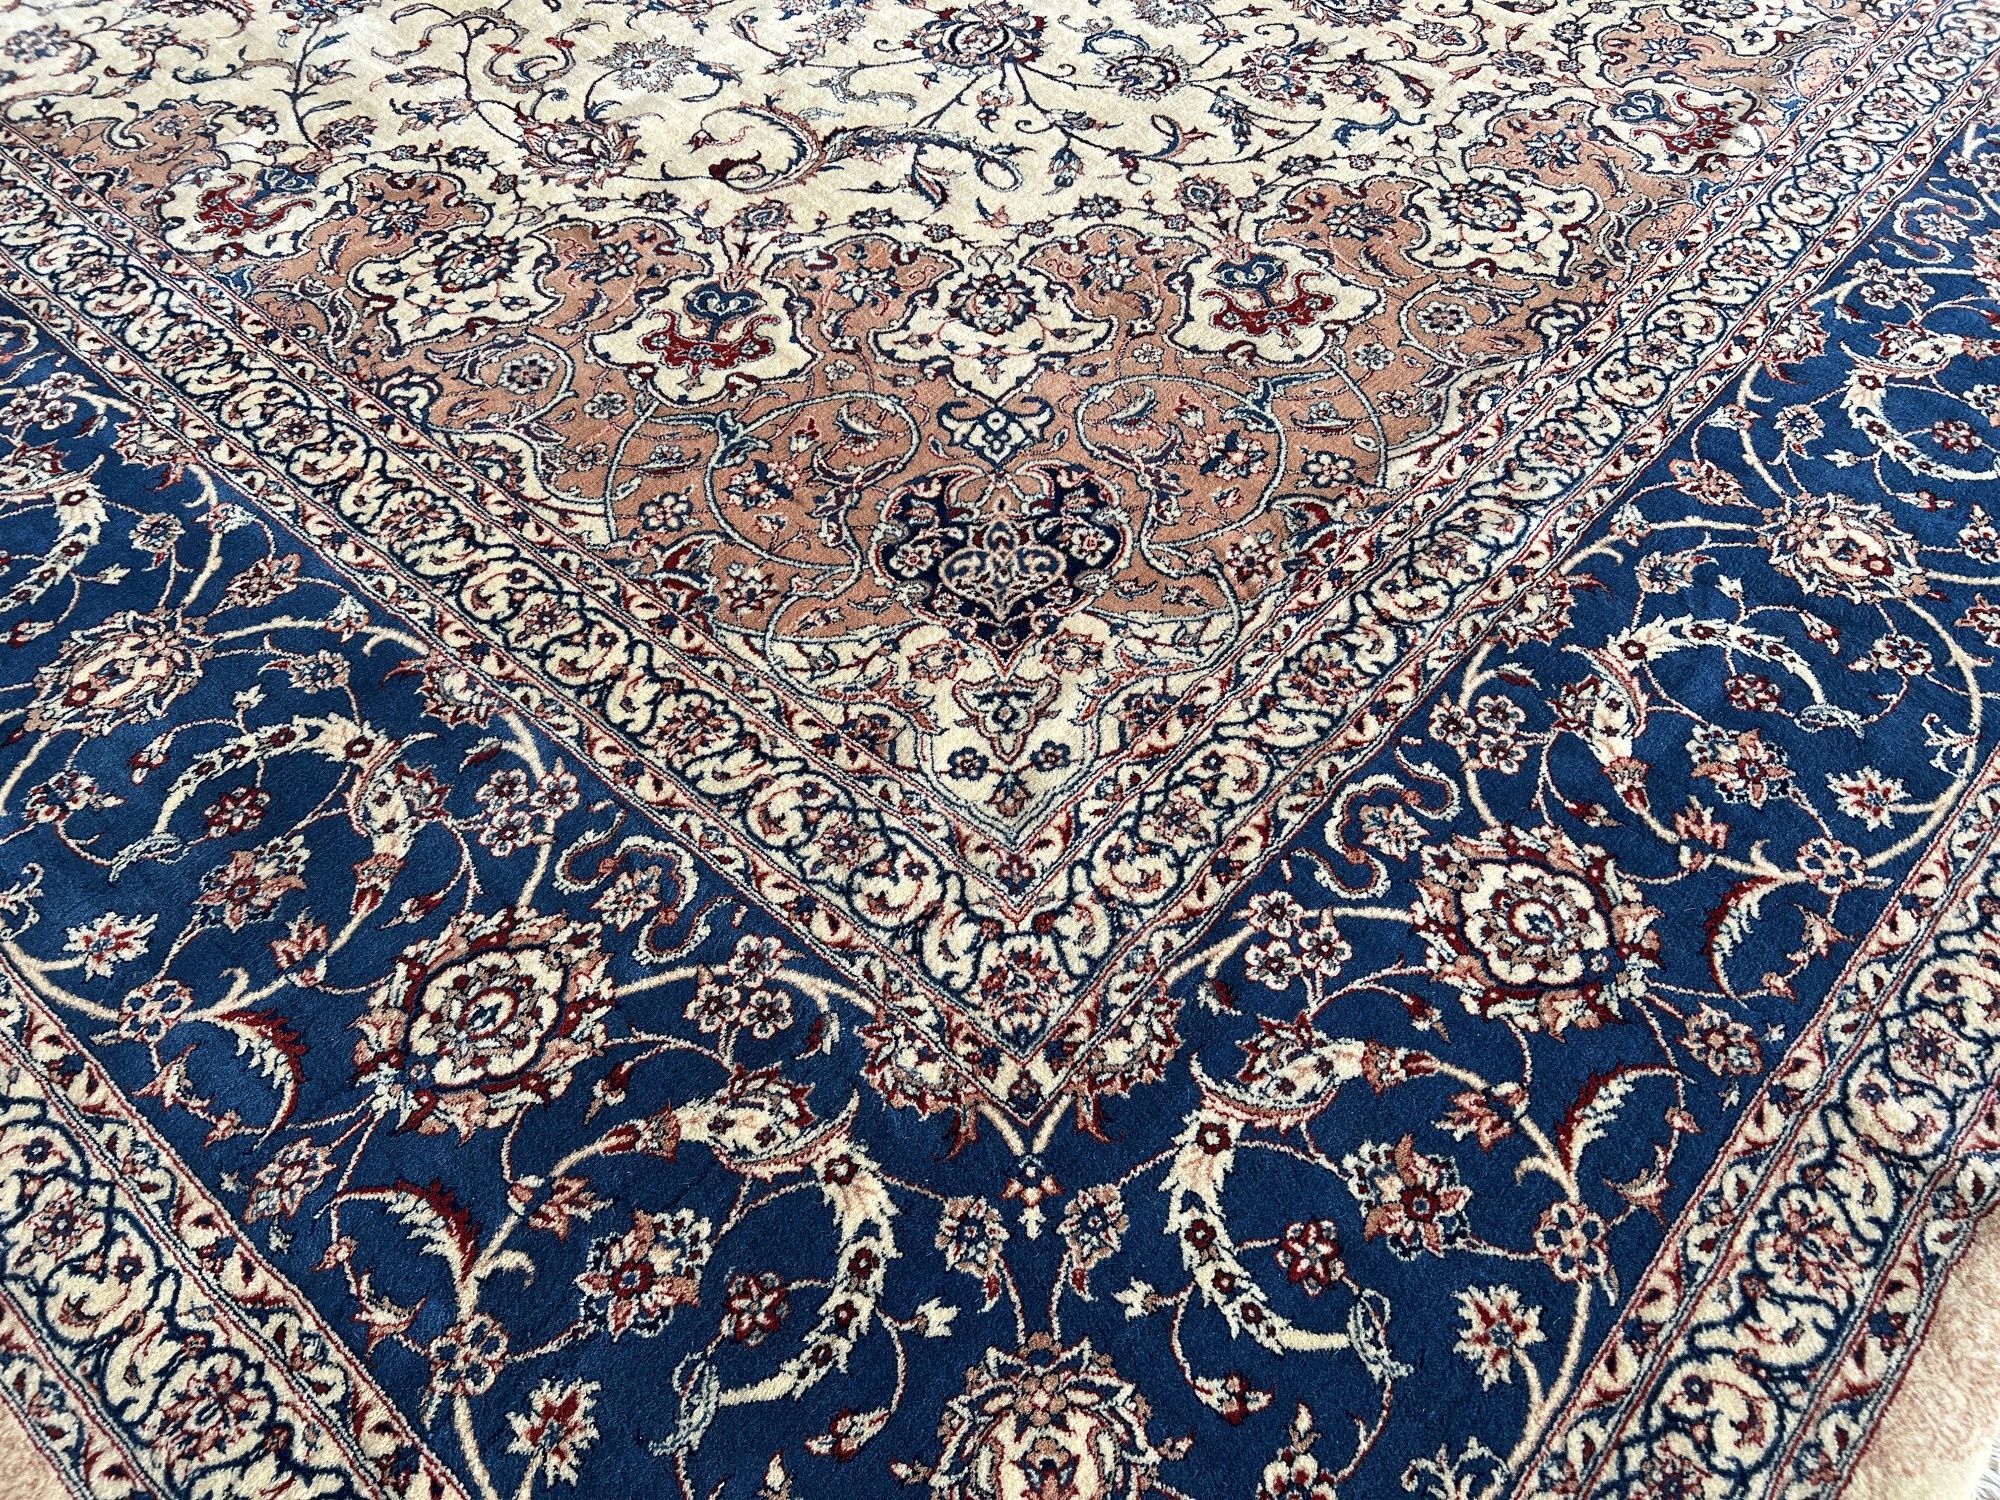 فرش پشمی ماشینی طبیعی و ارگانیک کد 1001 - زمینه کرم - حاشیه آبی پر رنگ